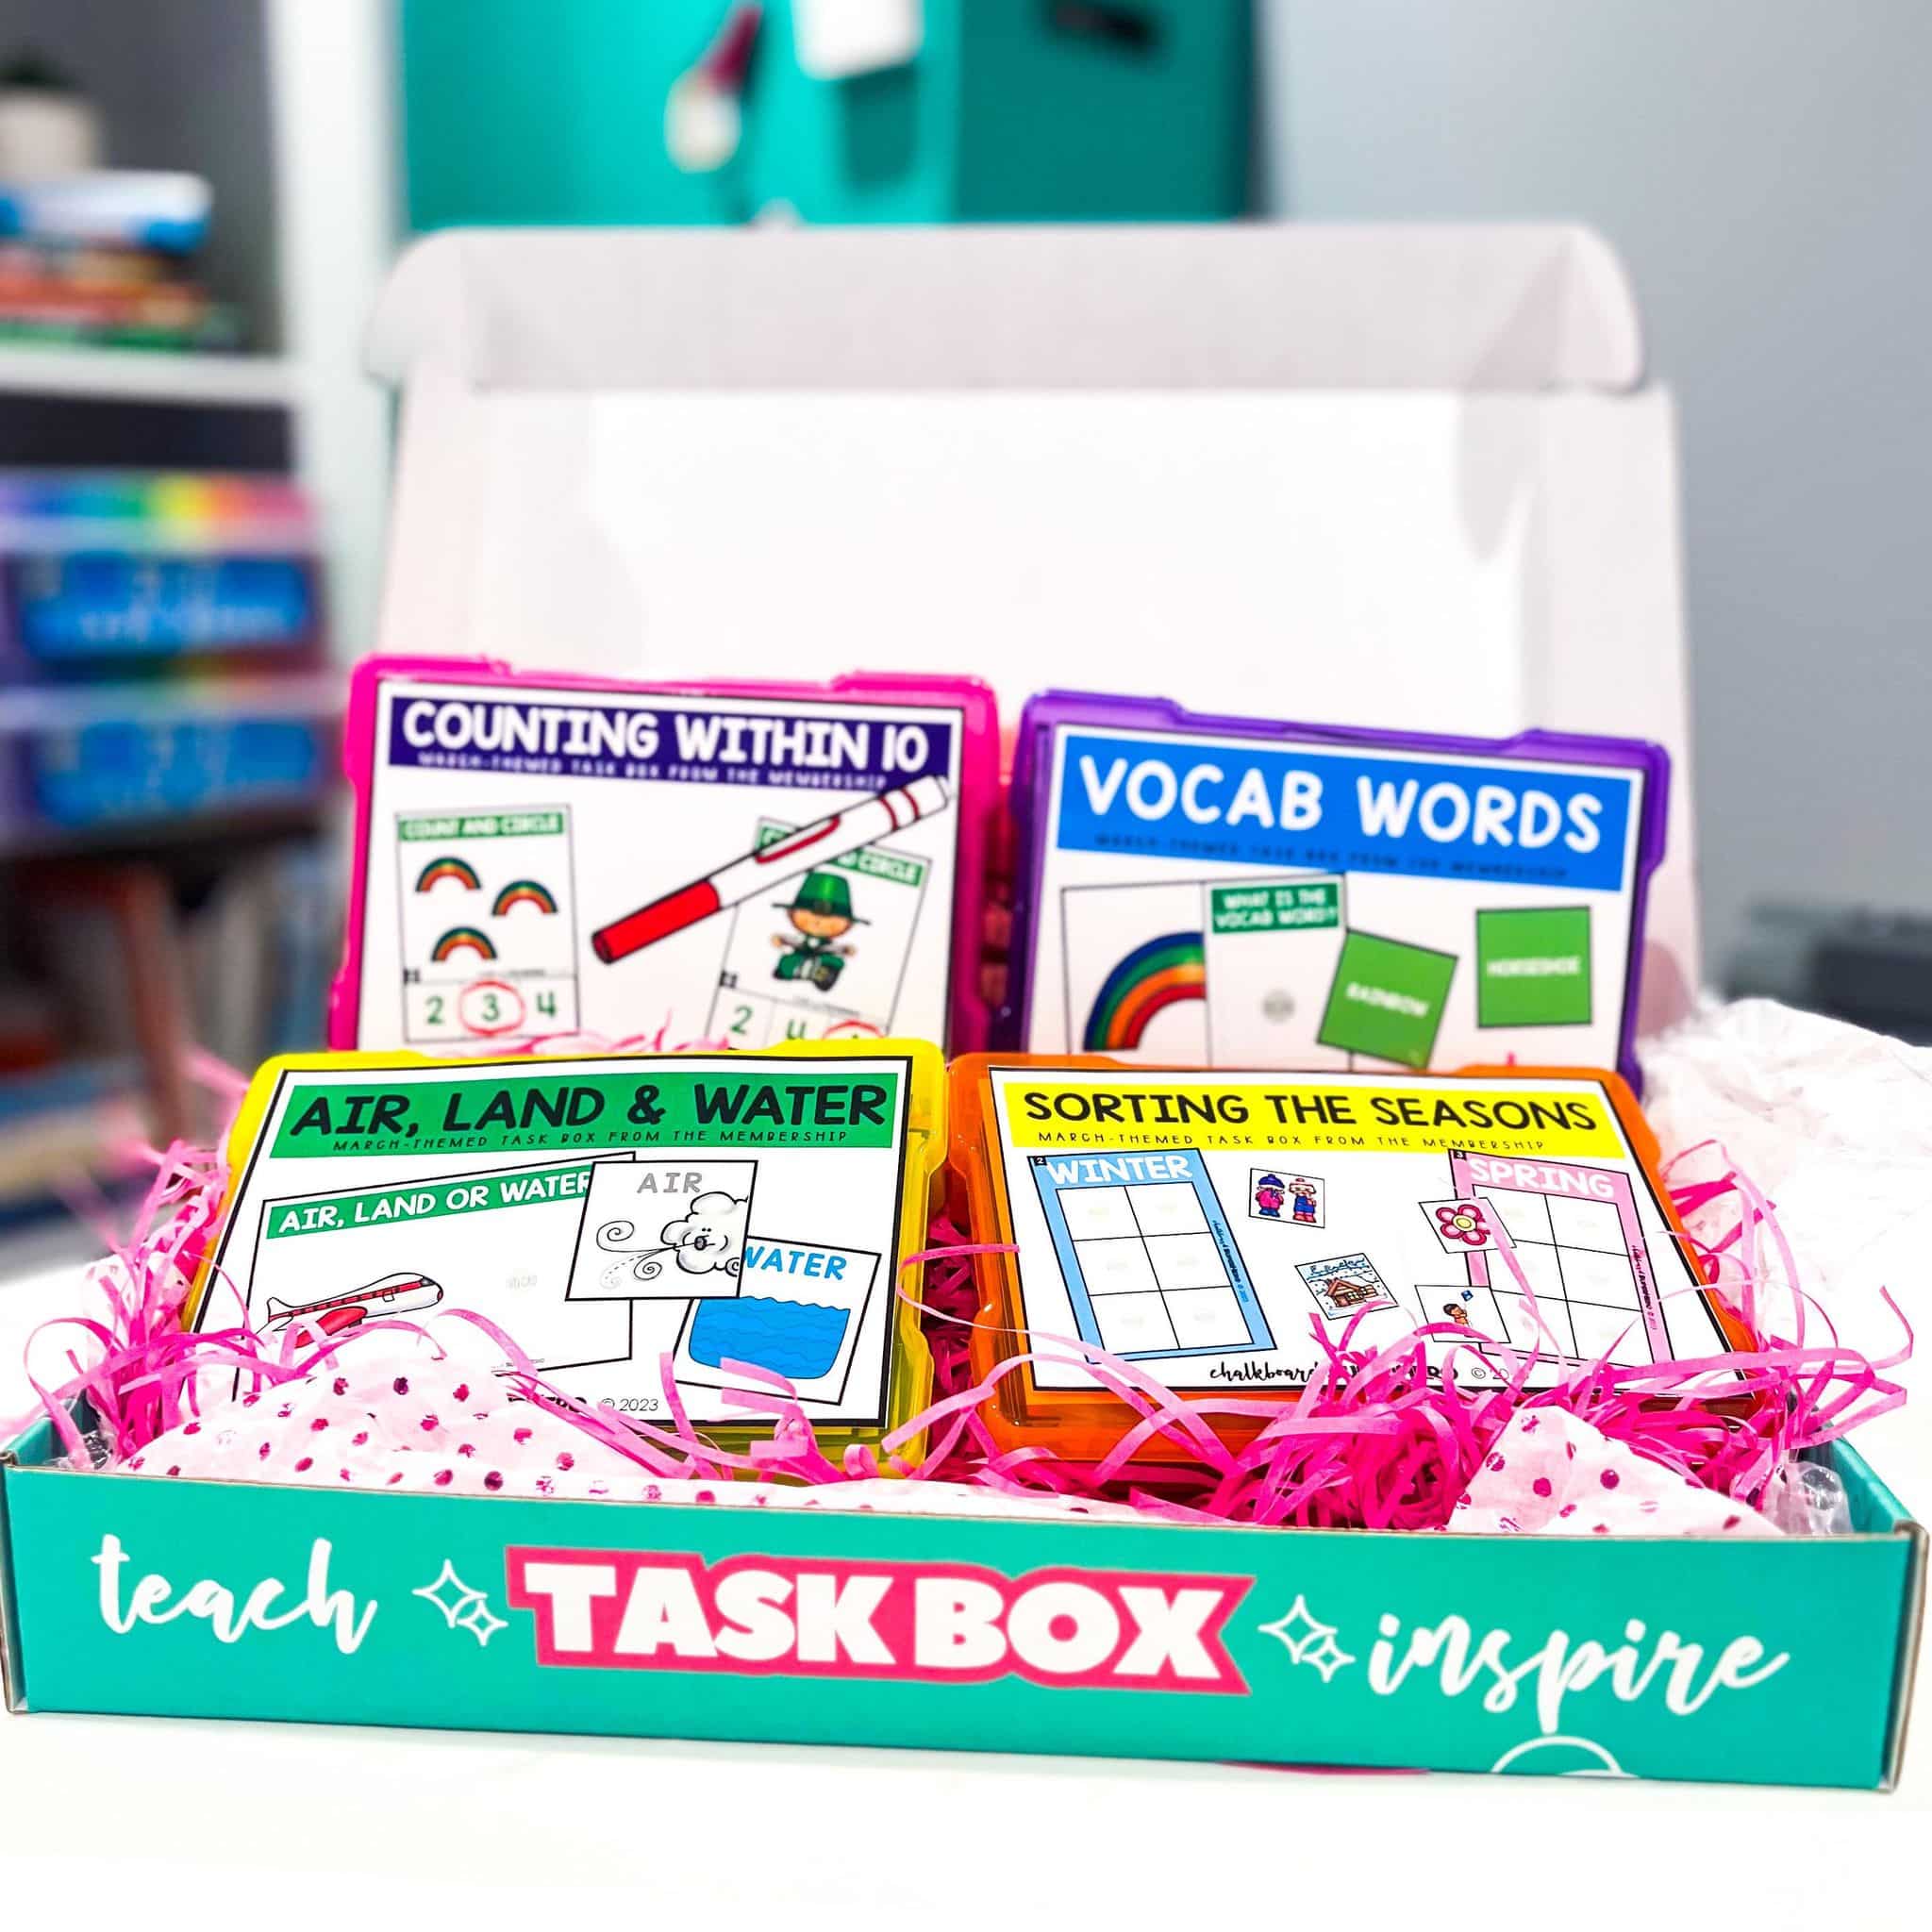 Teach Task Box Inspire the Membership